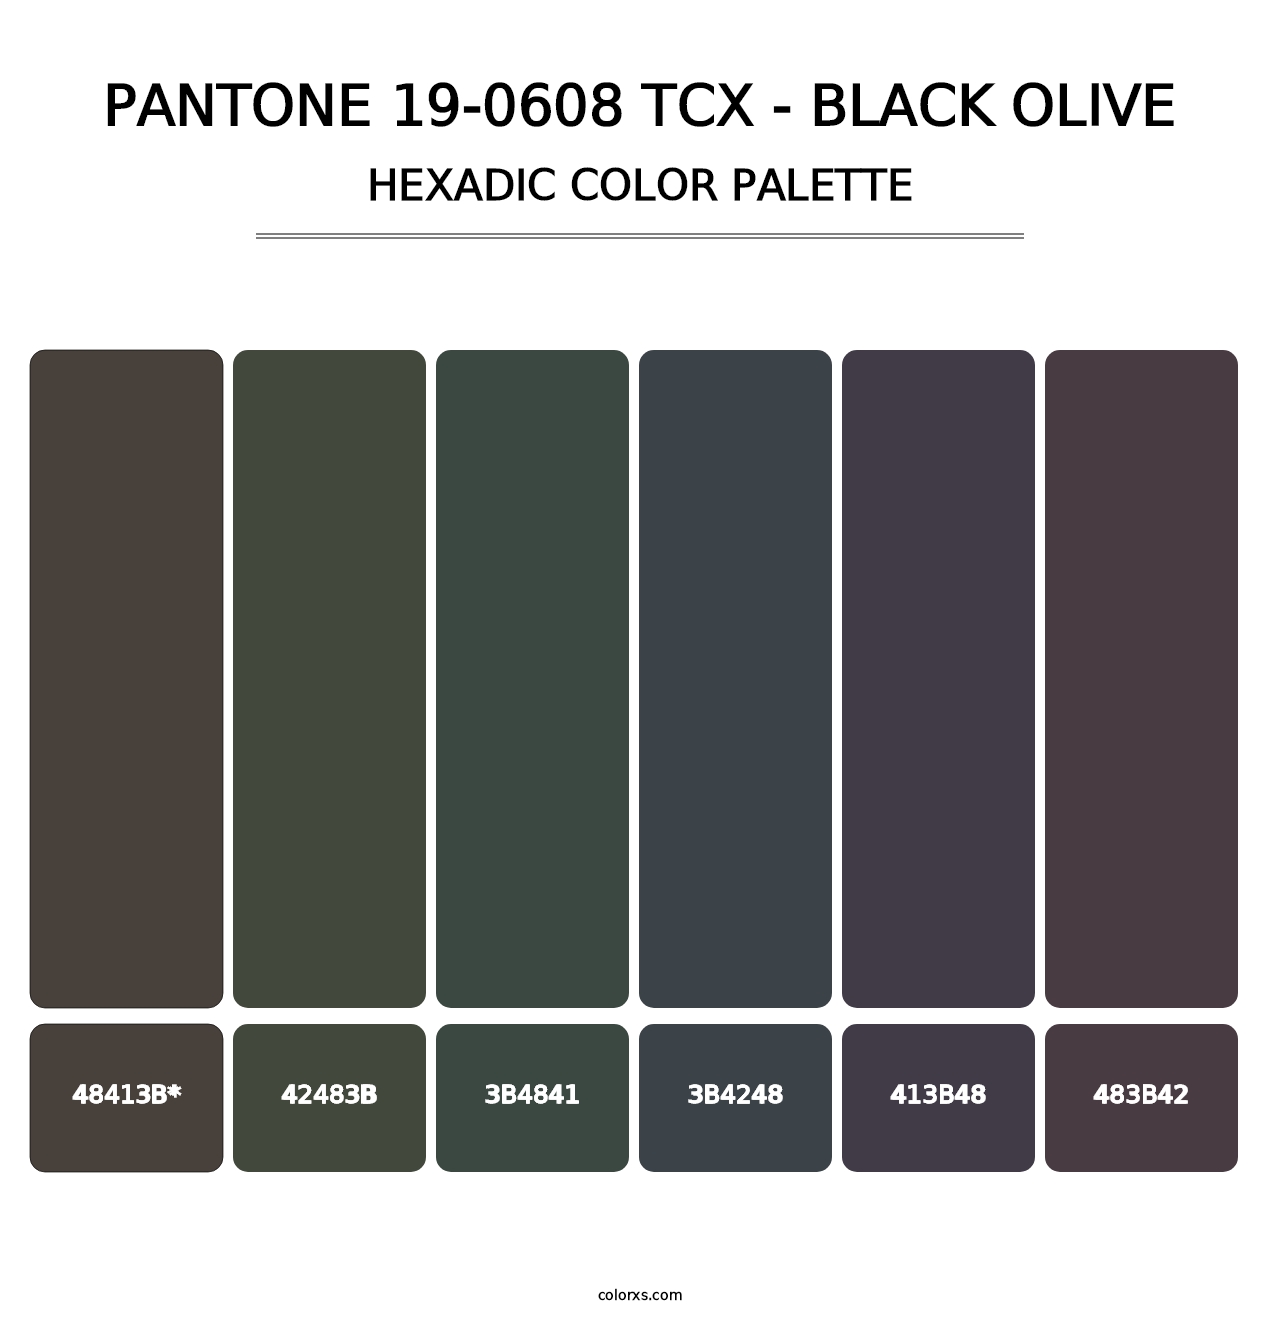 PANTONE 19-0608 TCX - Black Olive - Hexadic Color Palette